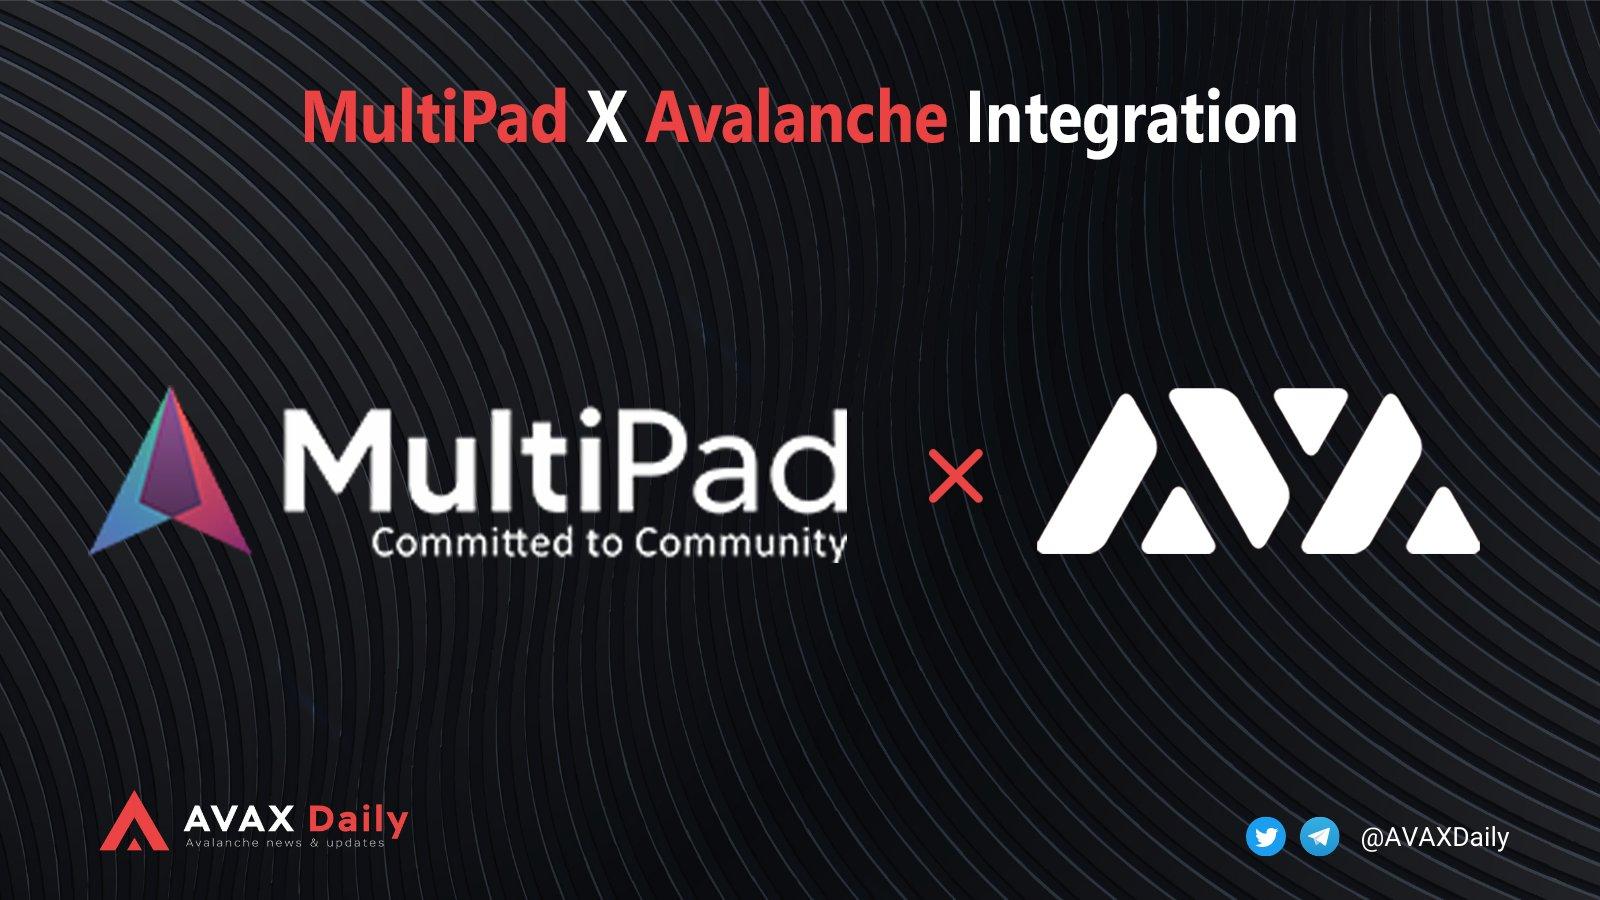 Multipad X Avalanche Integration